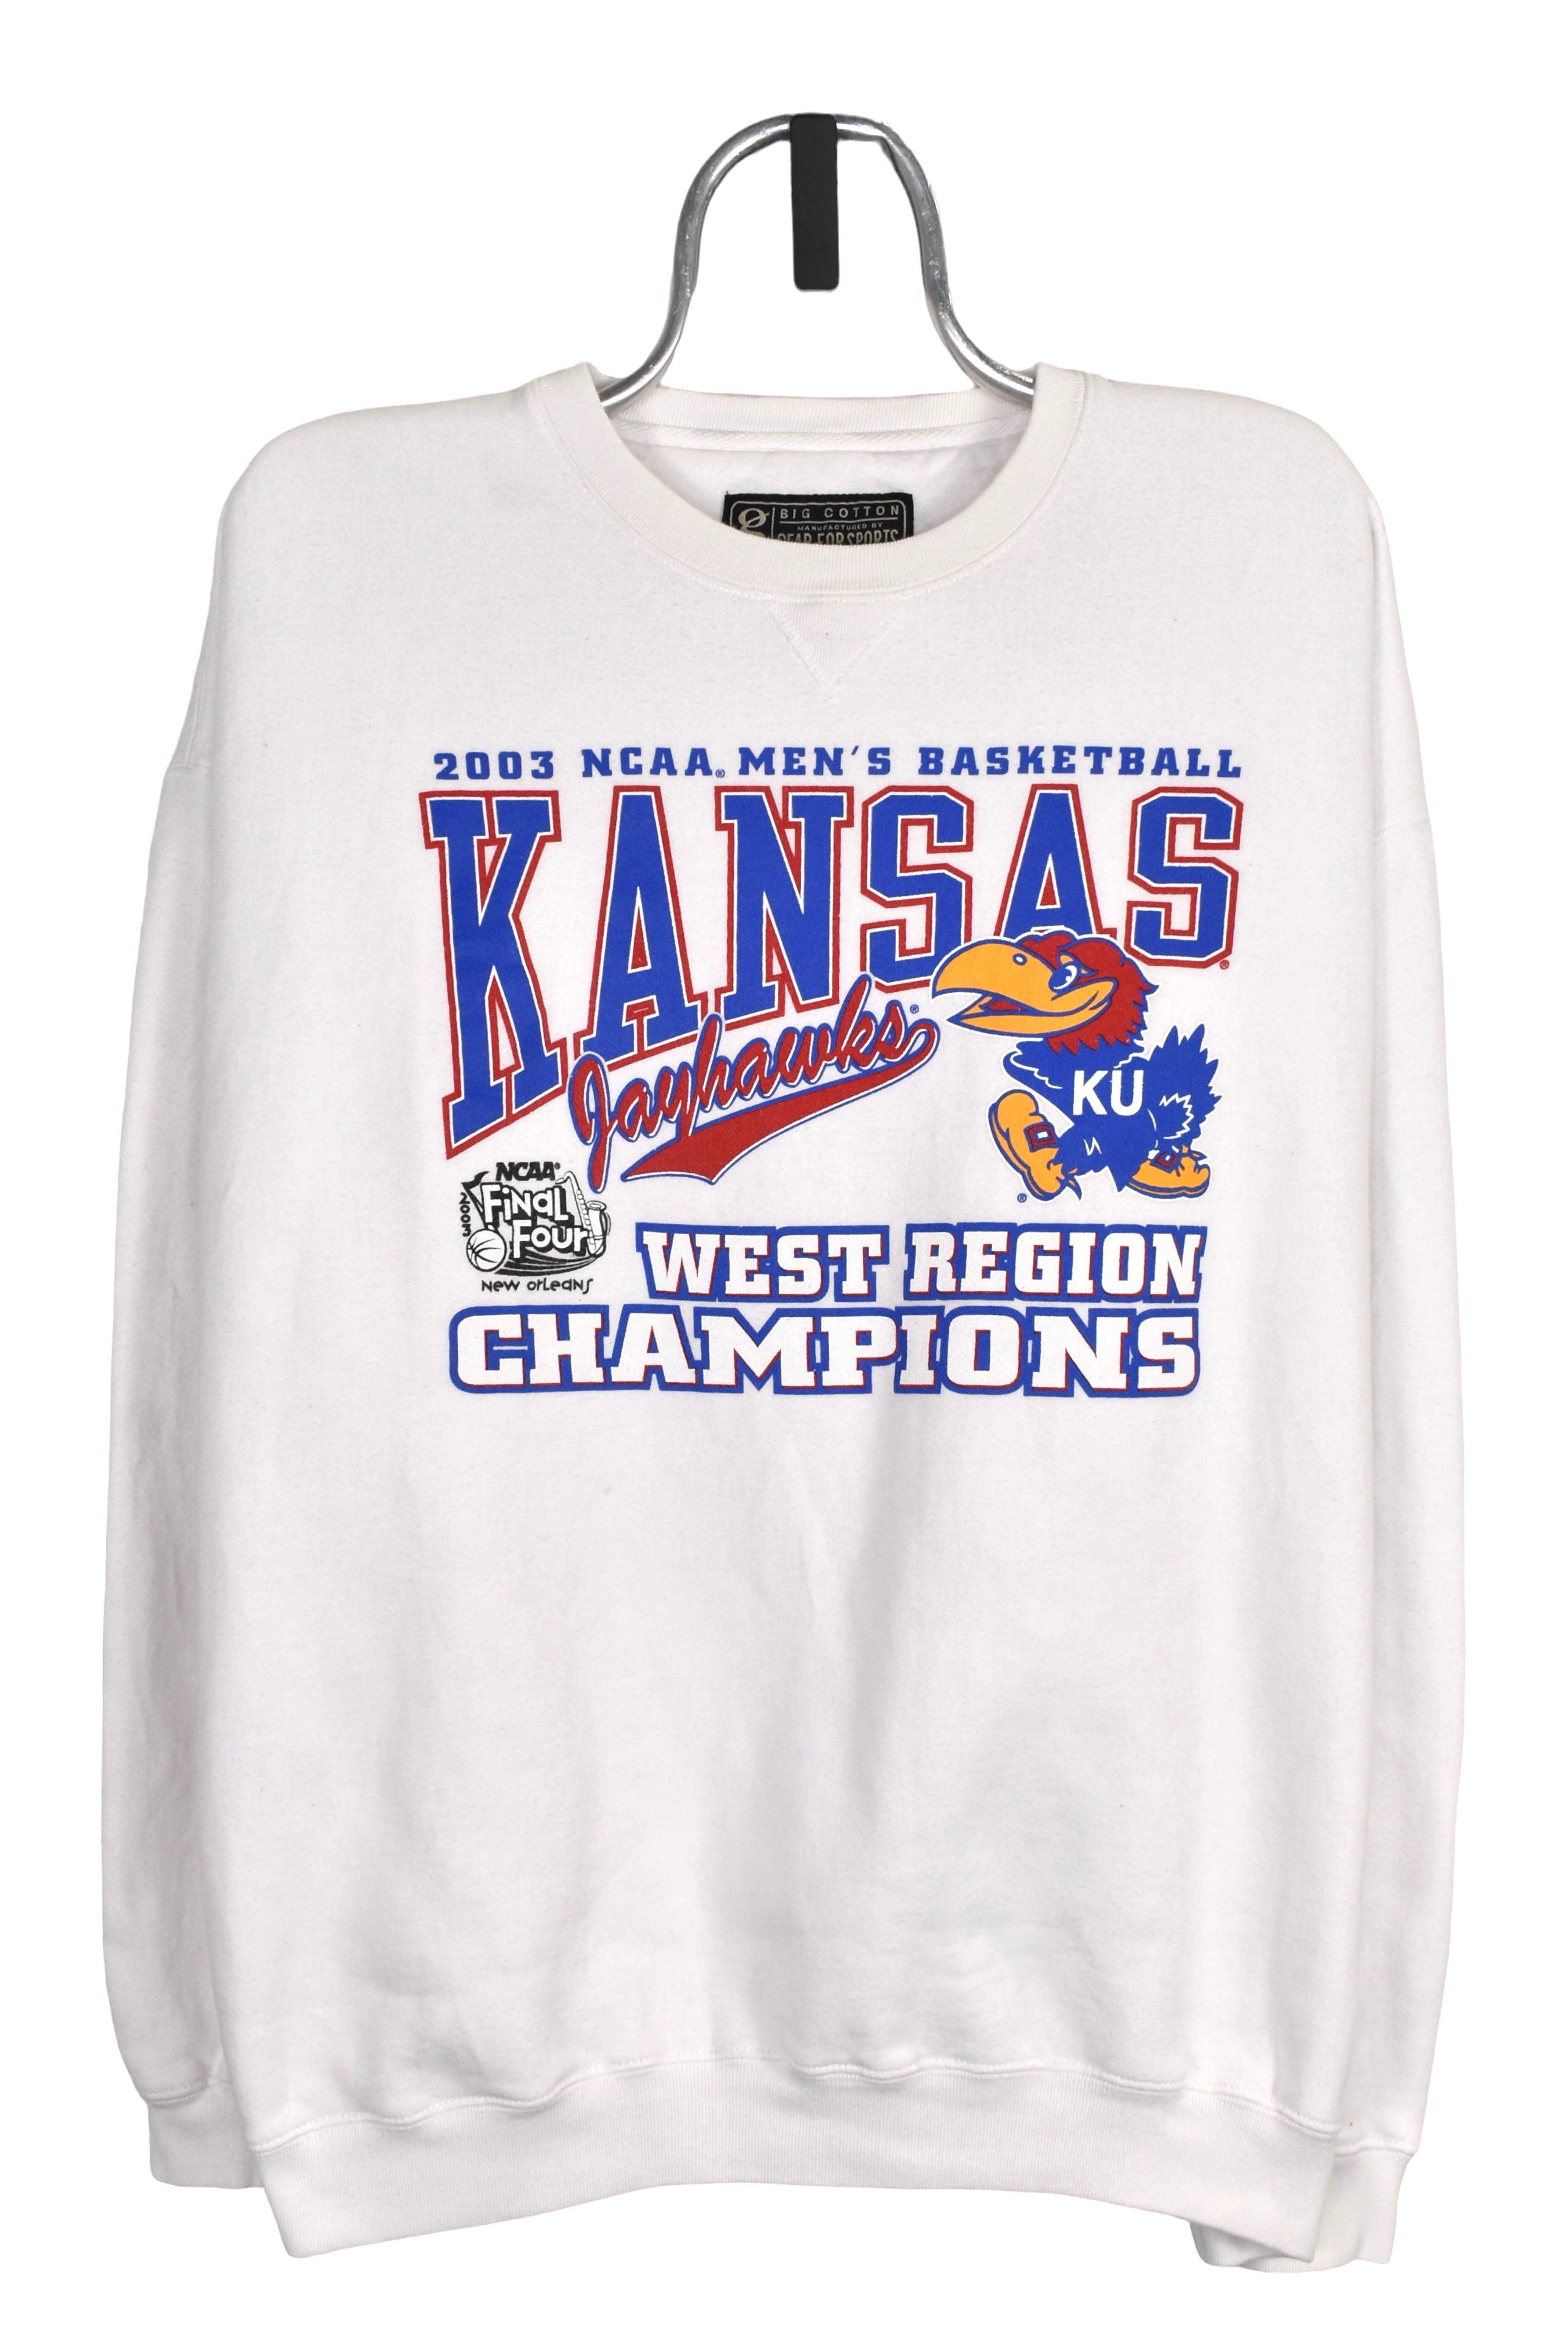 Vintage University of Kansas sweatshirt (XXL), white graphic crewneck